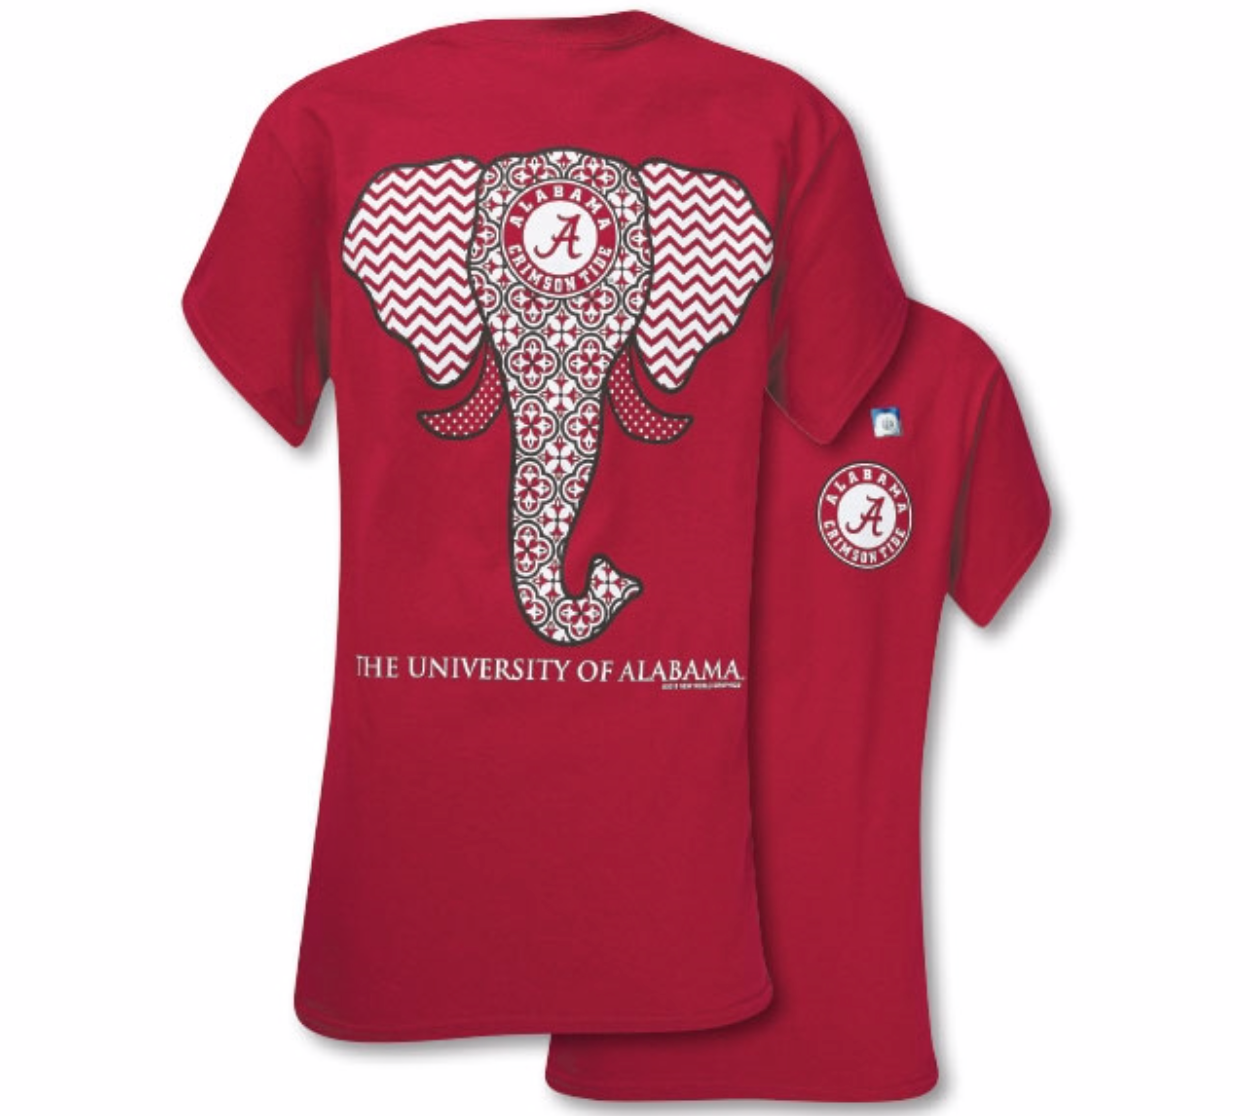 UGA Georgia Bulldogs Alabama Braves National Championship Elephant Shirt